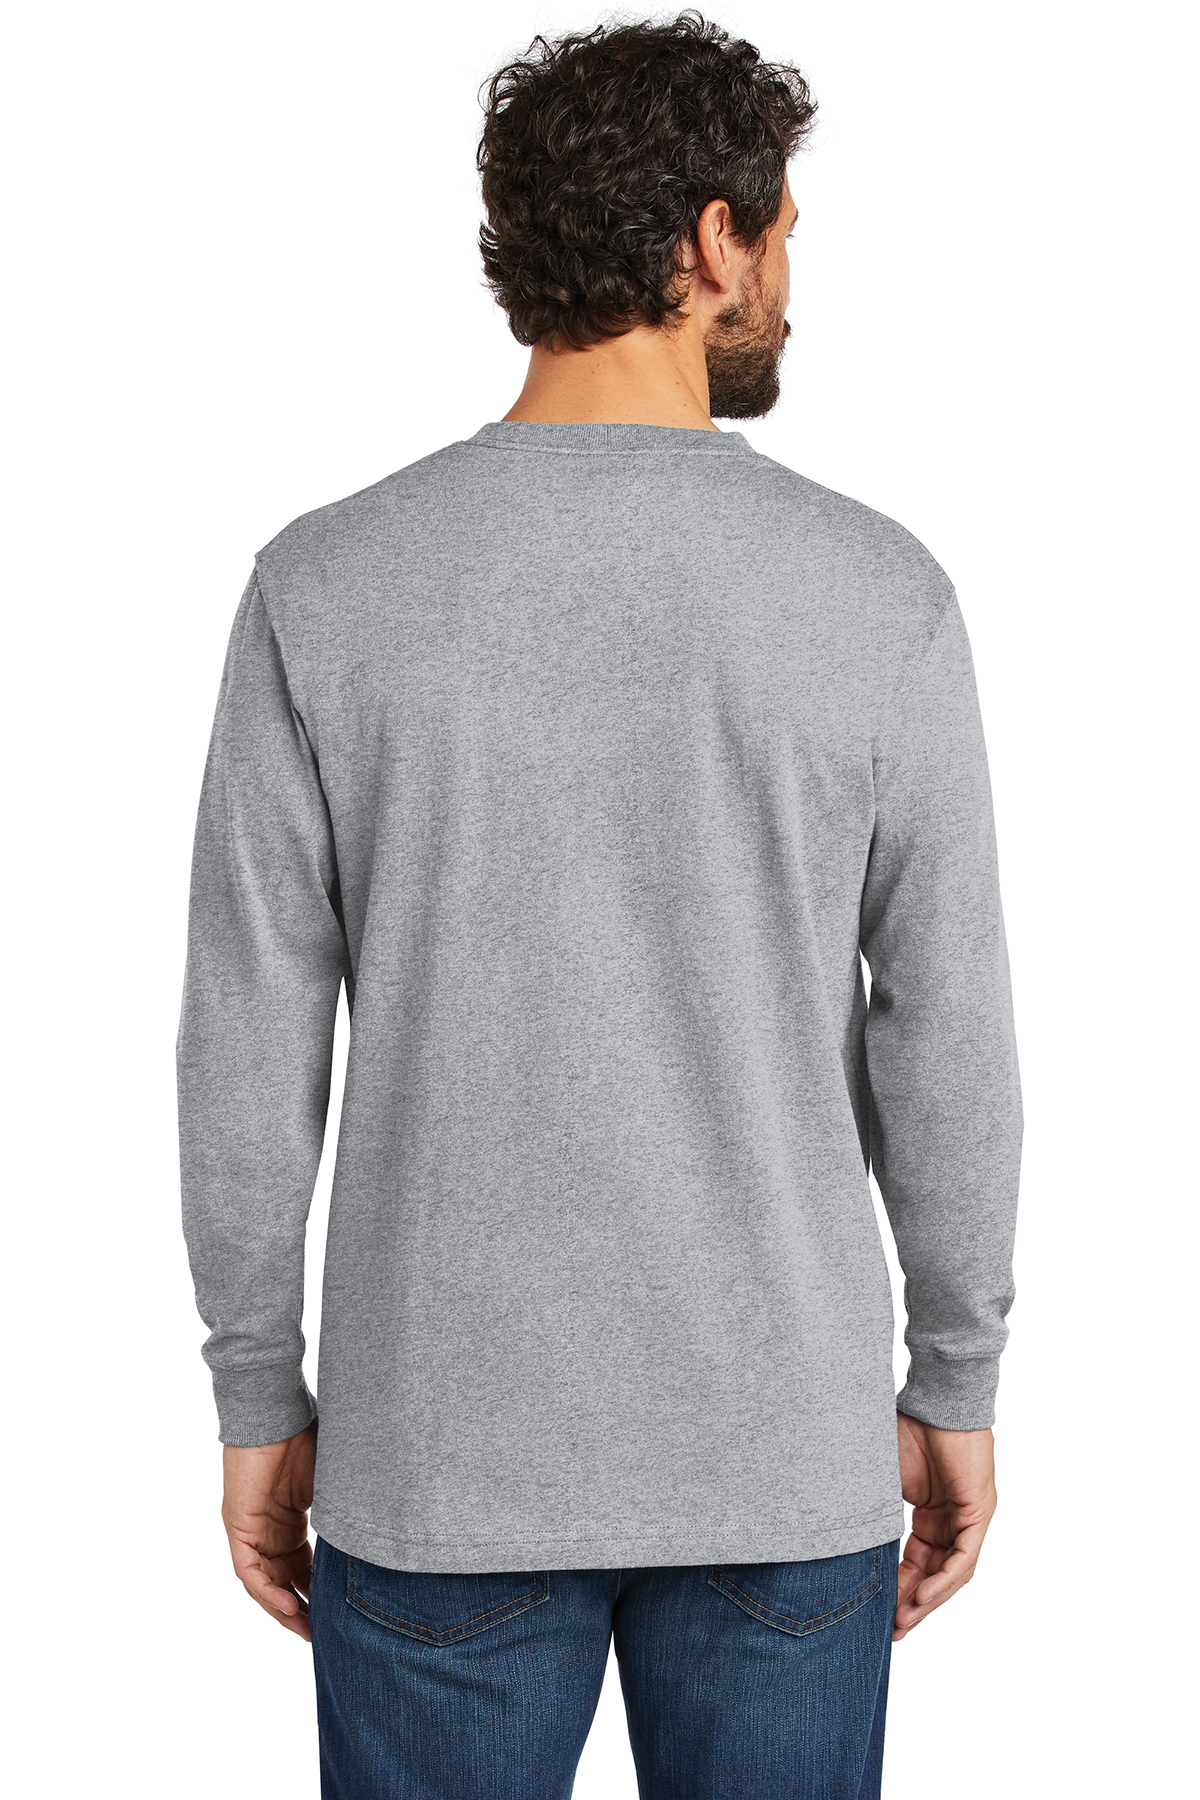 Carhartt Workwear Pocket T-Shirt - CTK87